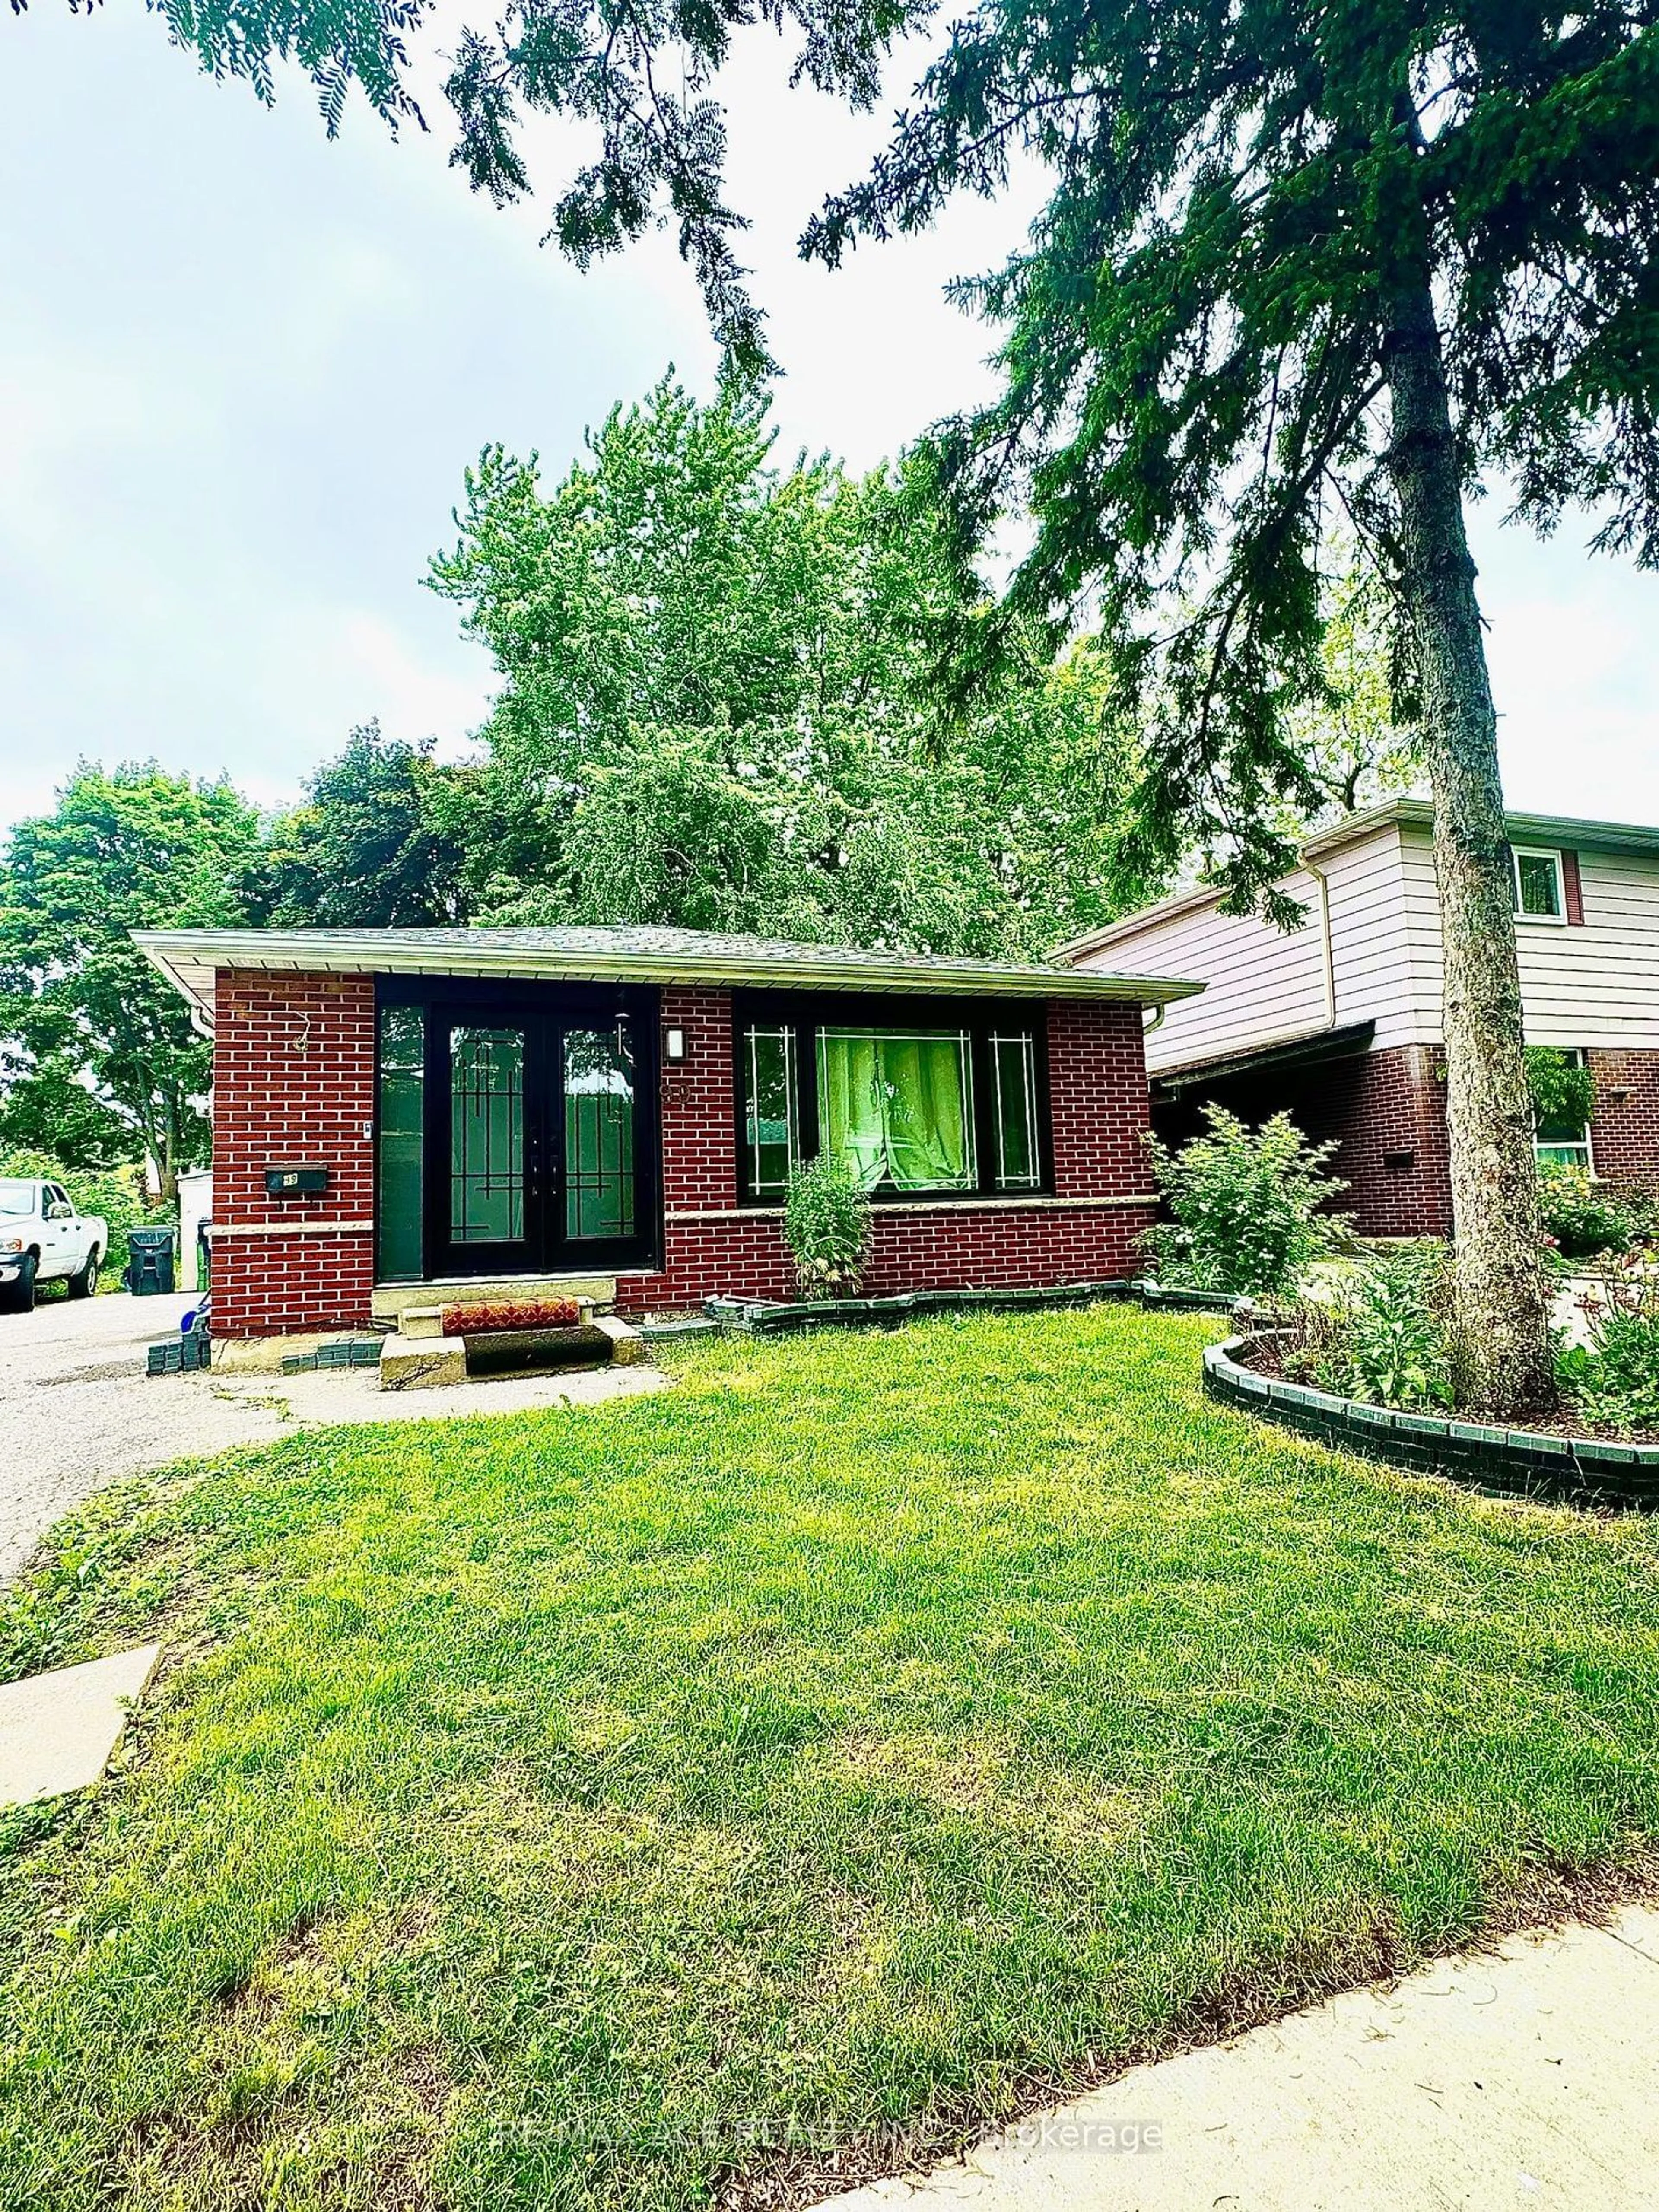 Home with brick exterior material for 99 Dowswell Dr, Toronto Ontario M1B 1H5